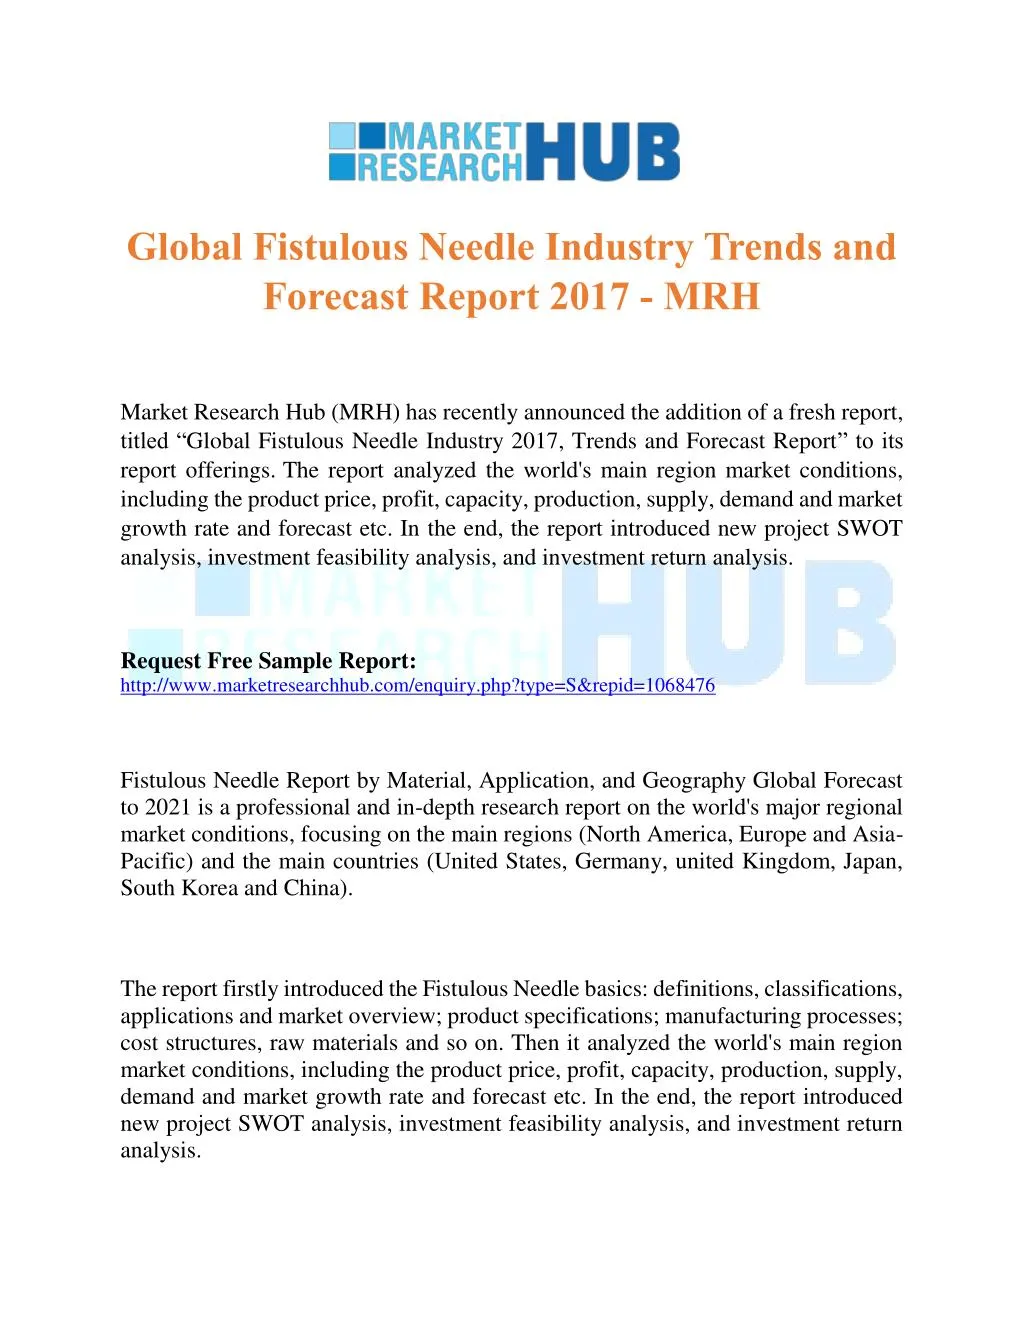 global fistulous needle industry trends